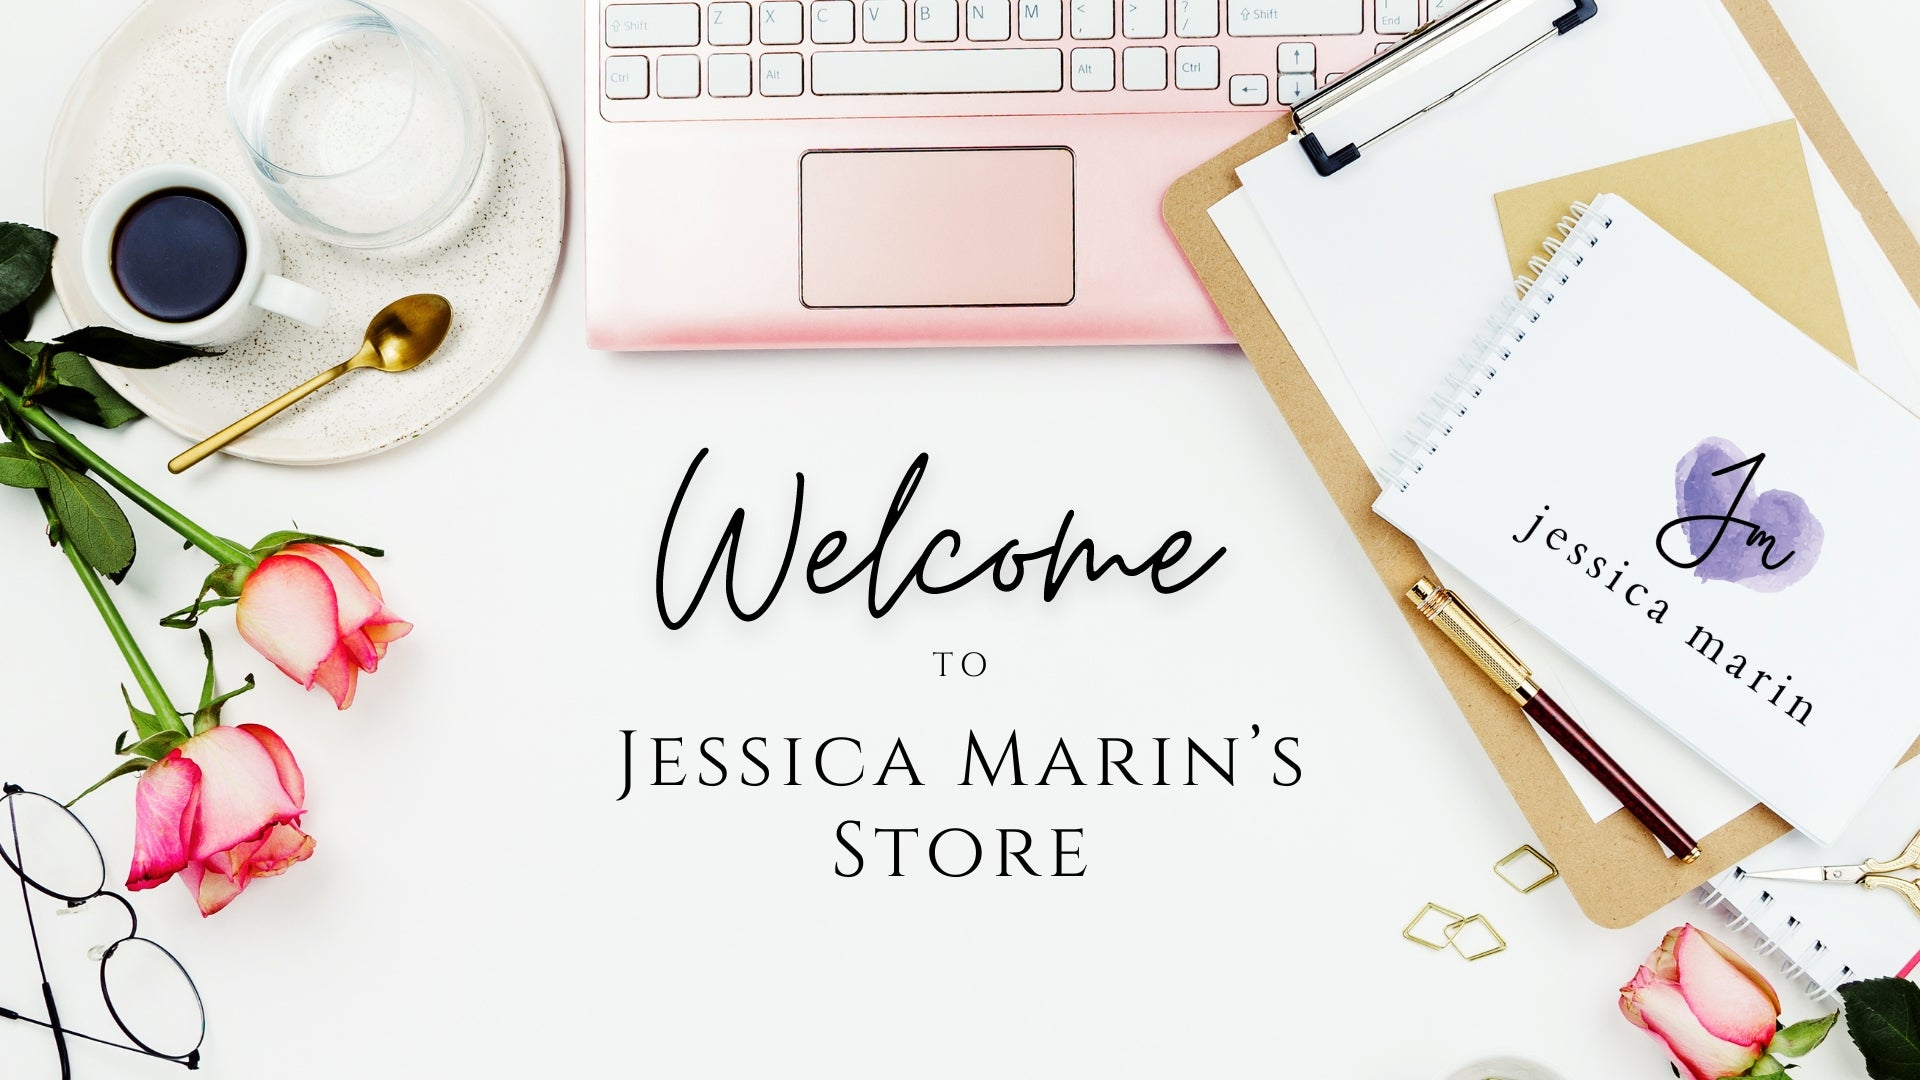 Romance Author Jessica Marin's Bookstore